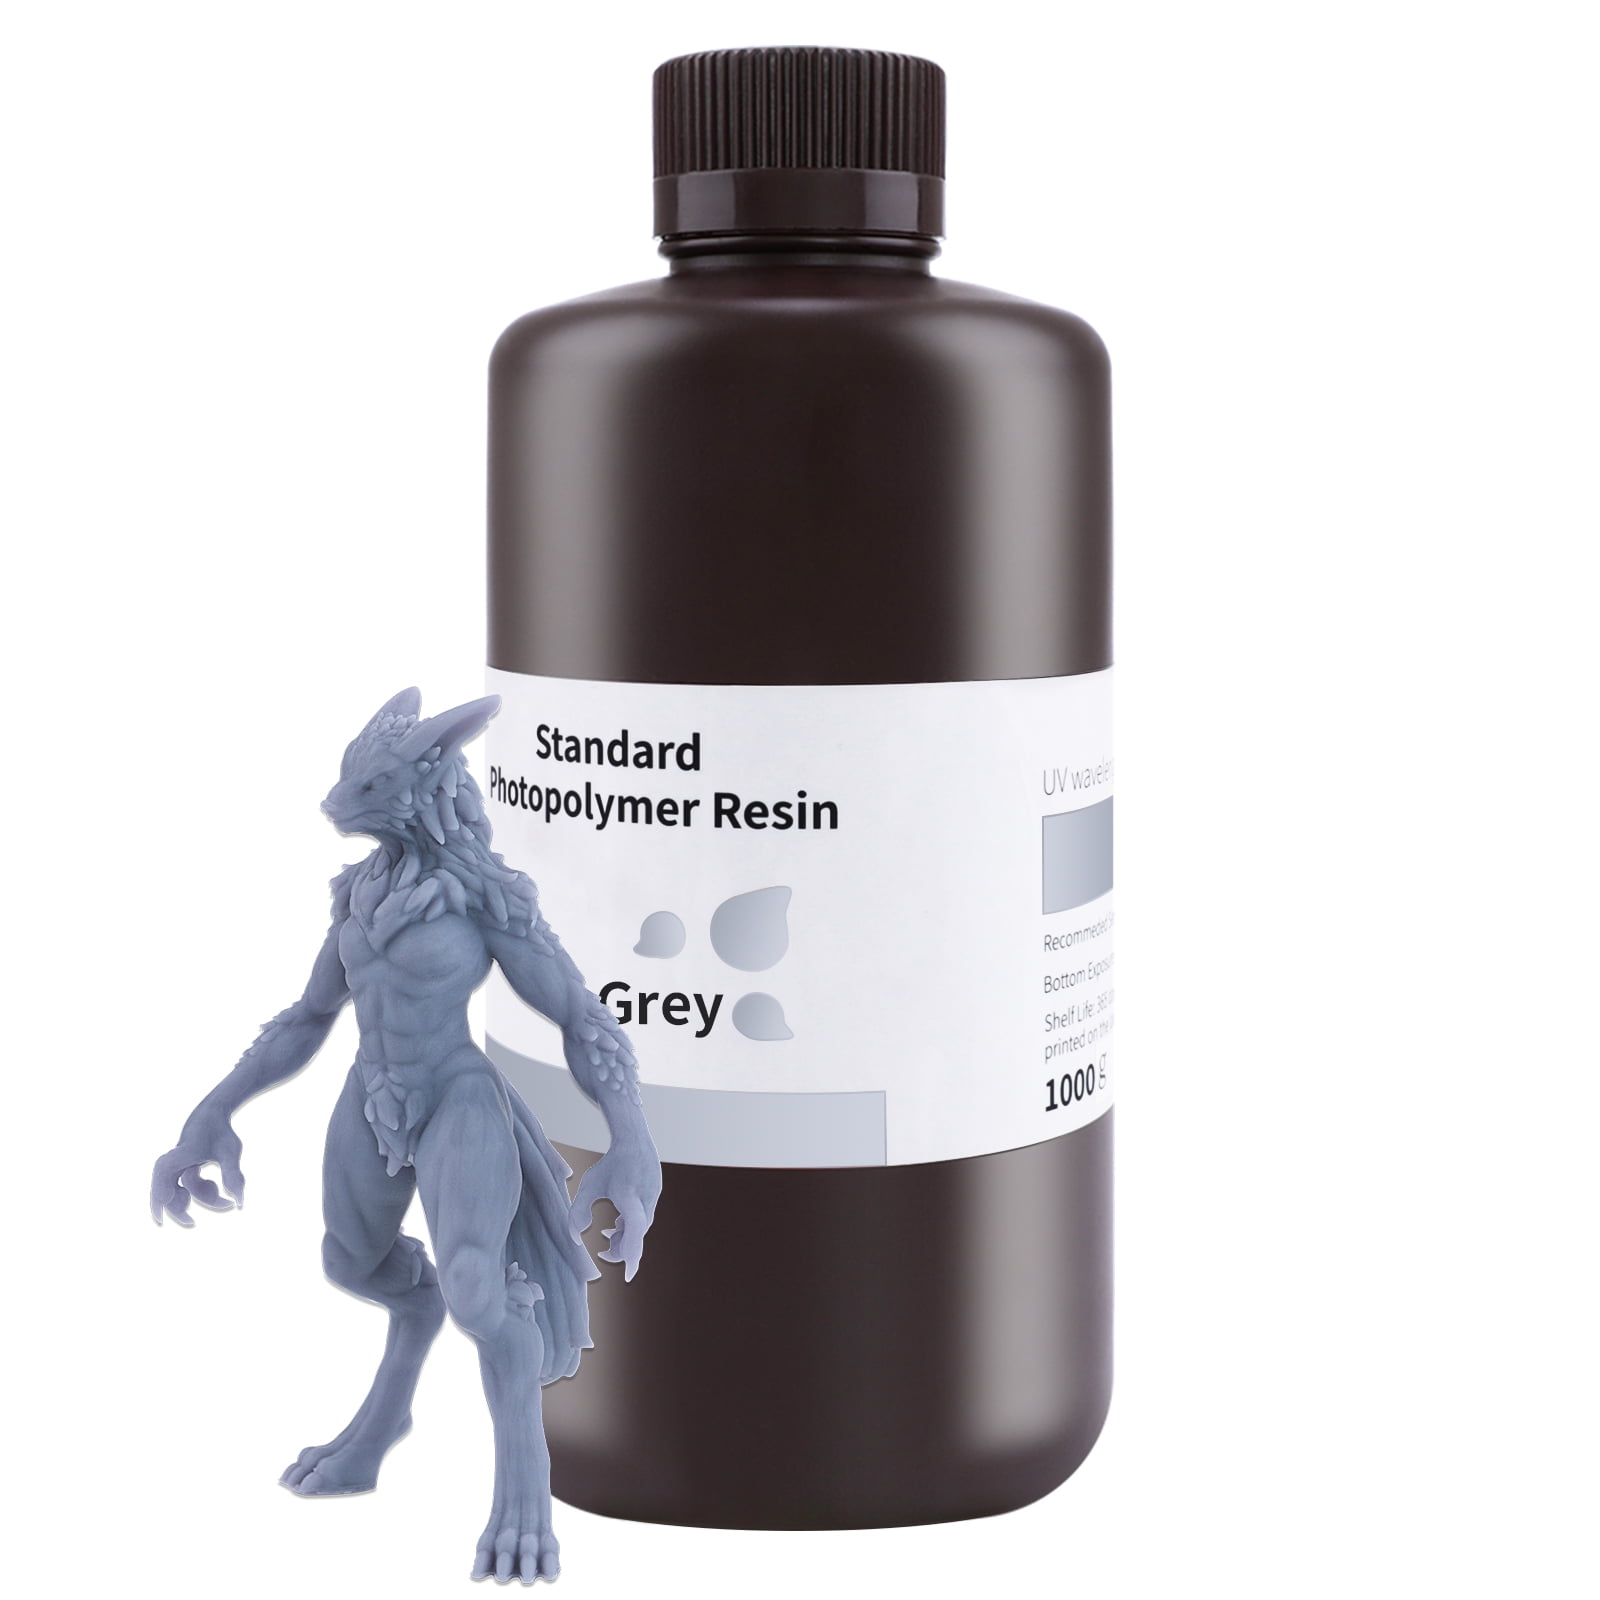 ELEGOO ABS-like Photopolymer Resin V2.0 Grey – ELEGOO Official